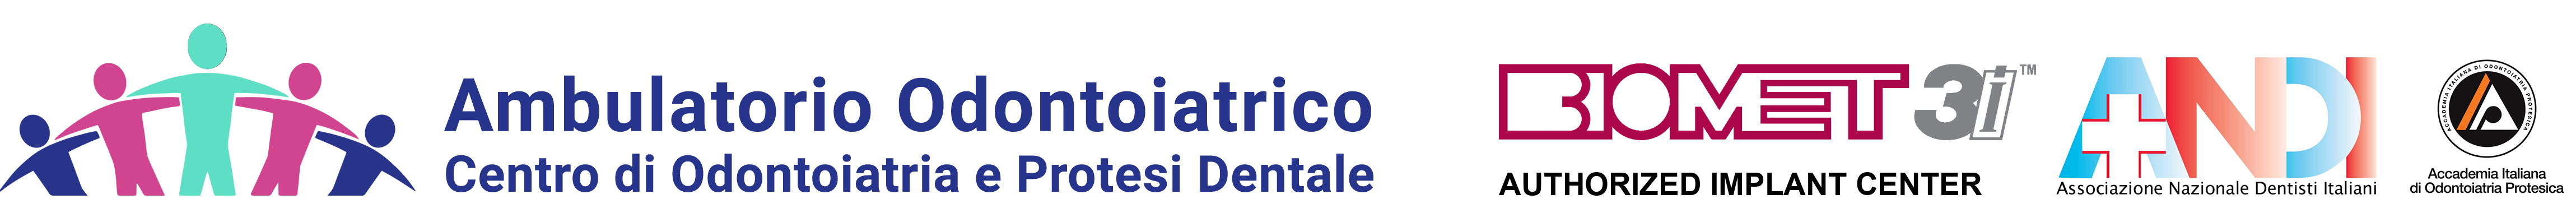 Ambulatorio Odontoiatrico Logo